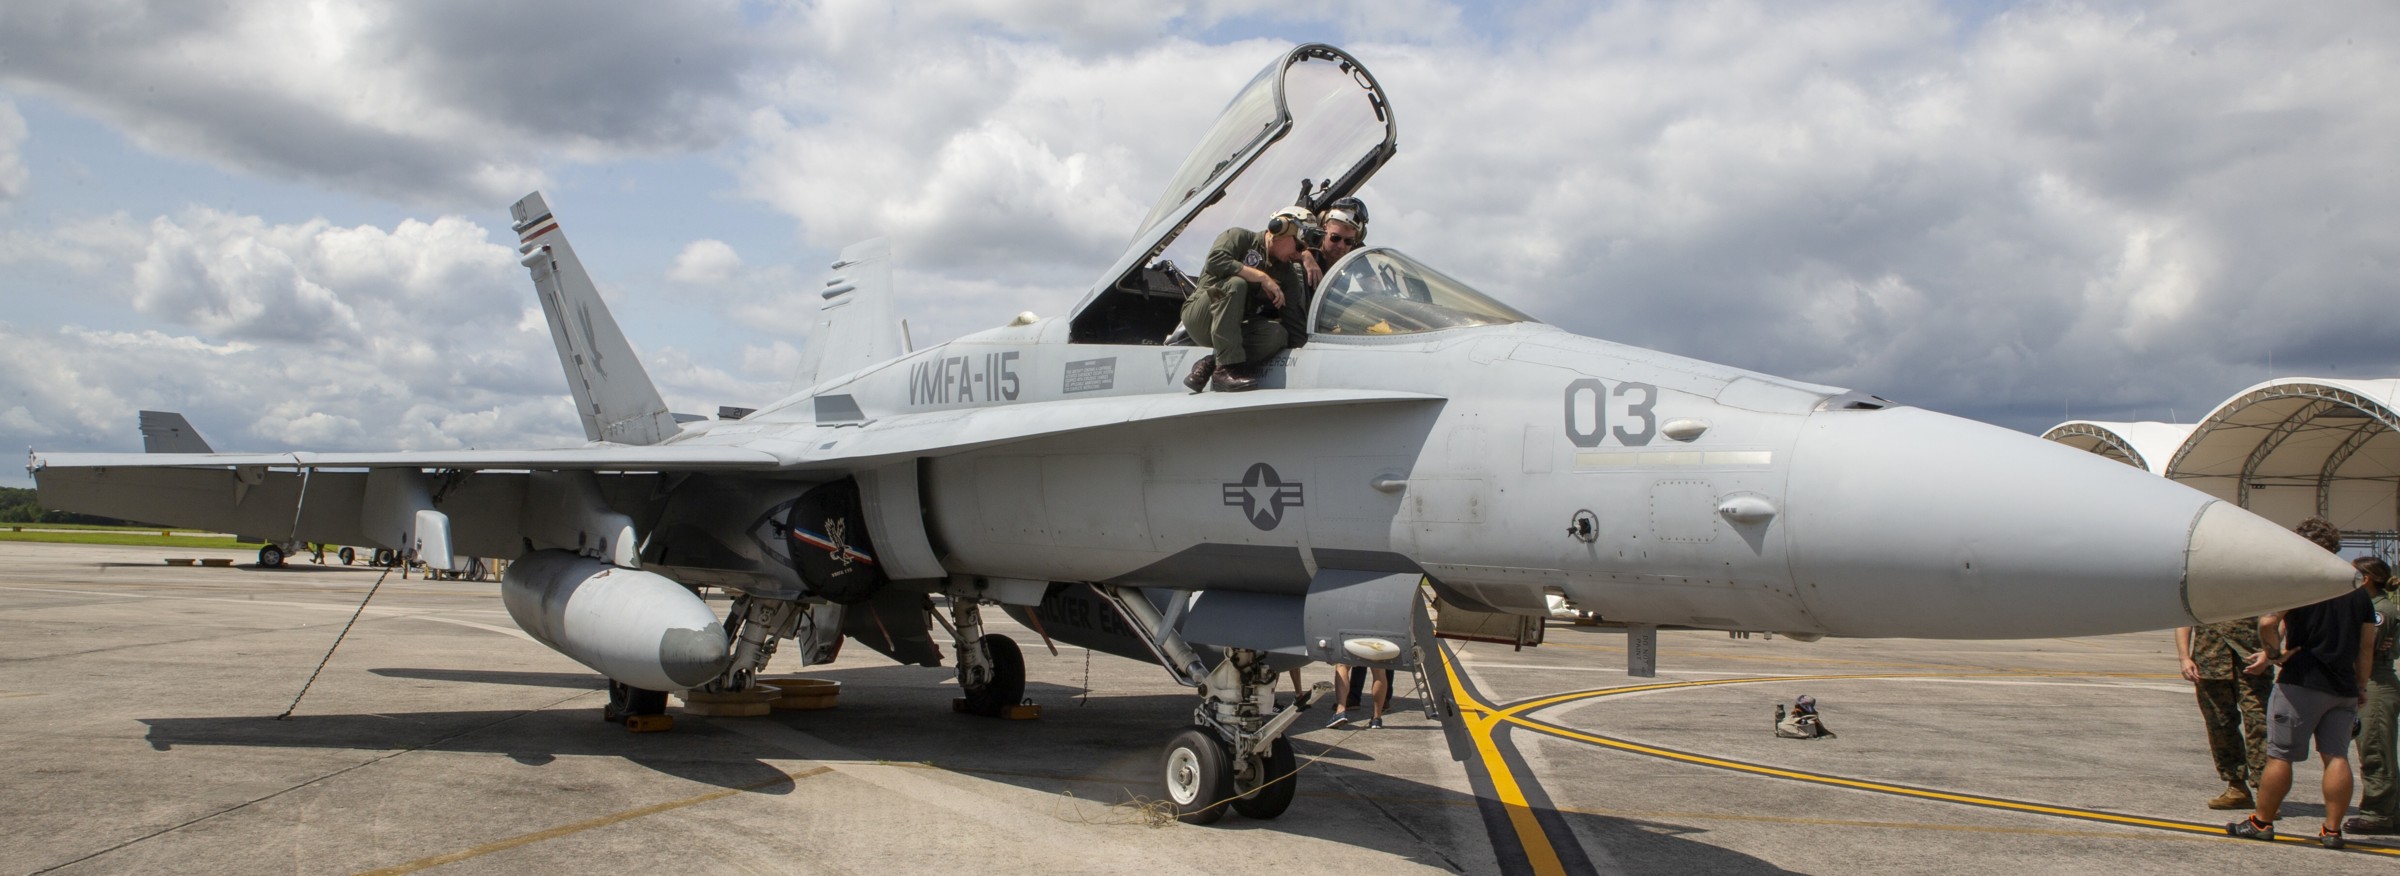 vmfa-115 silver eagles marine fighter attack squadron usmc f/a-18c hornet 233 mcas beaufort